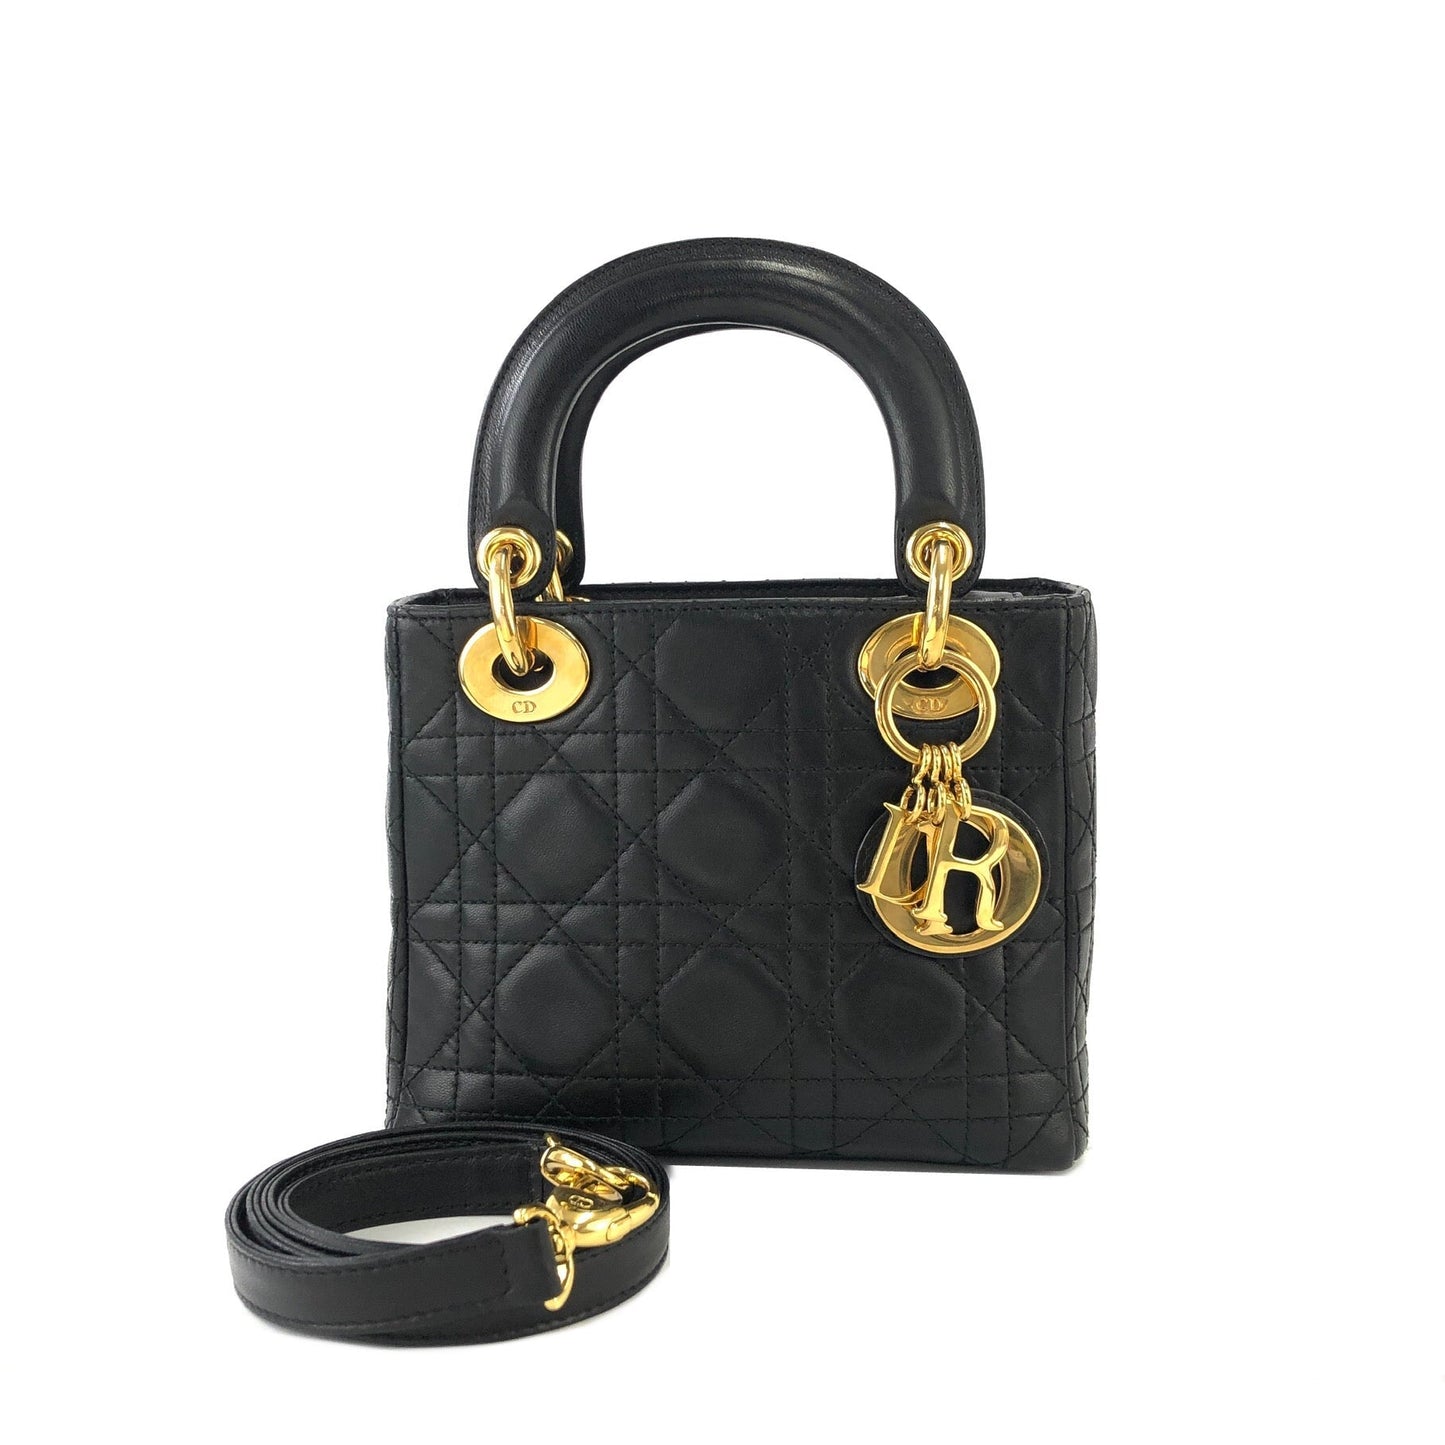 Christian Dior Cannage Lady dior Leather Small Handbag Shoulder bag Black 7tgg5g